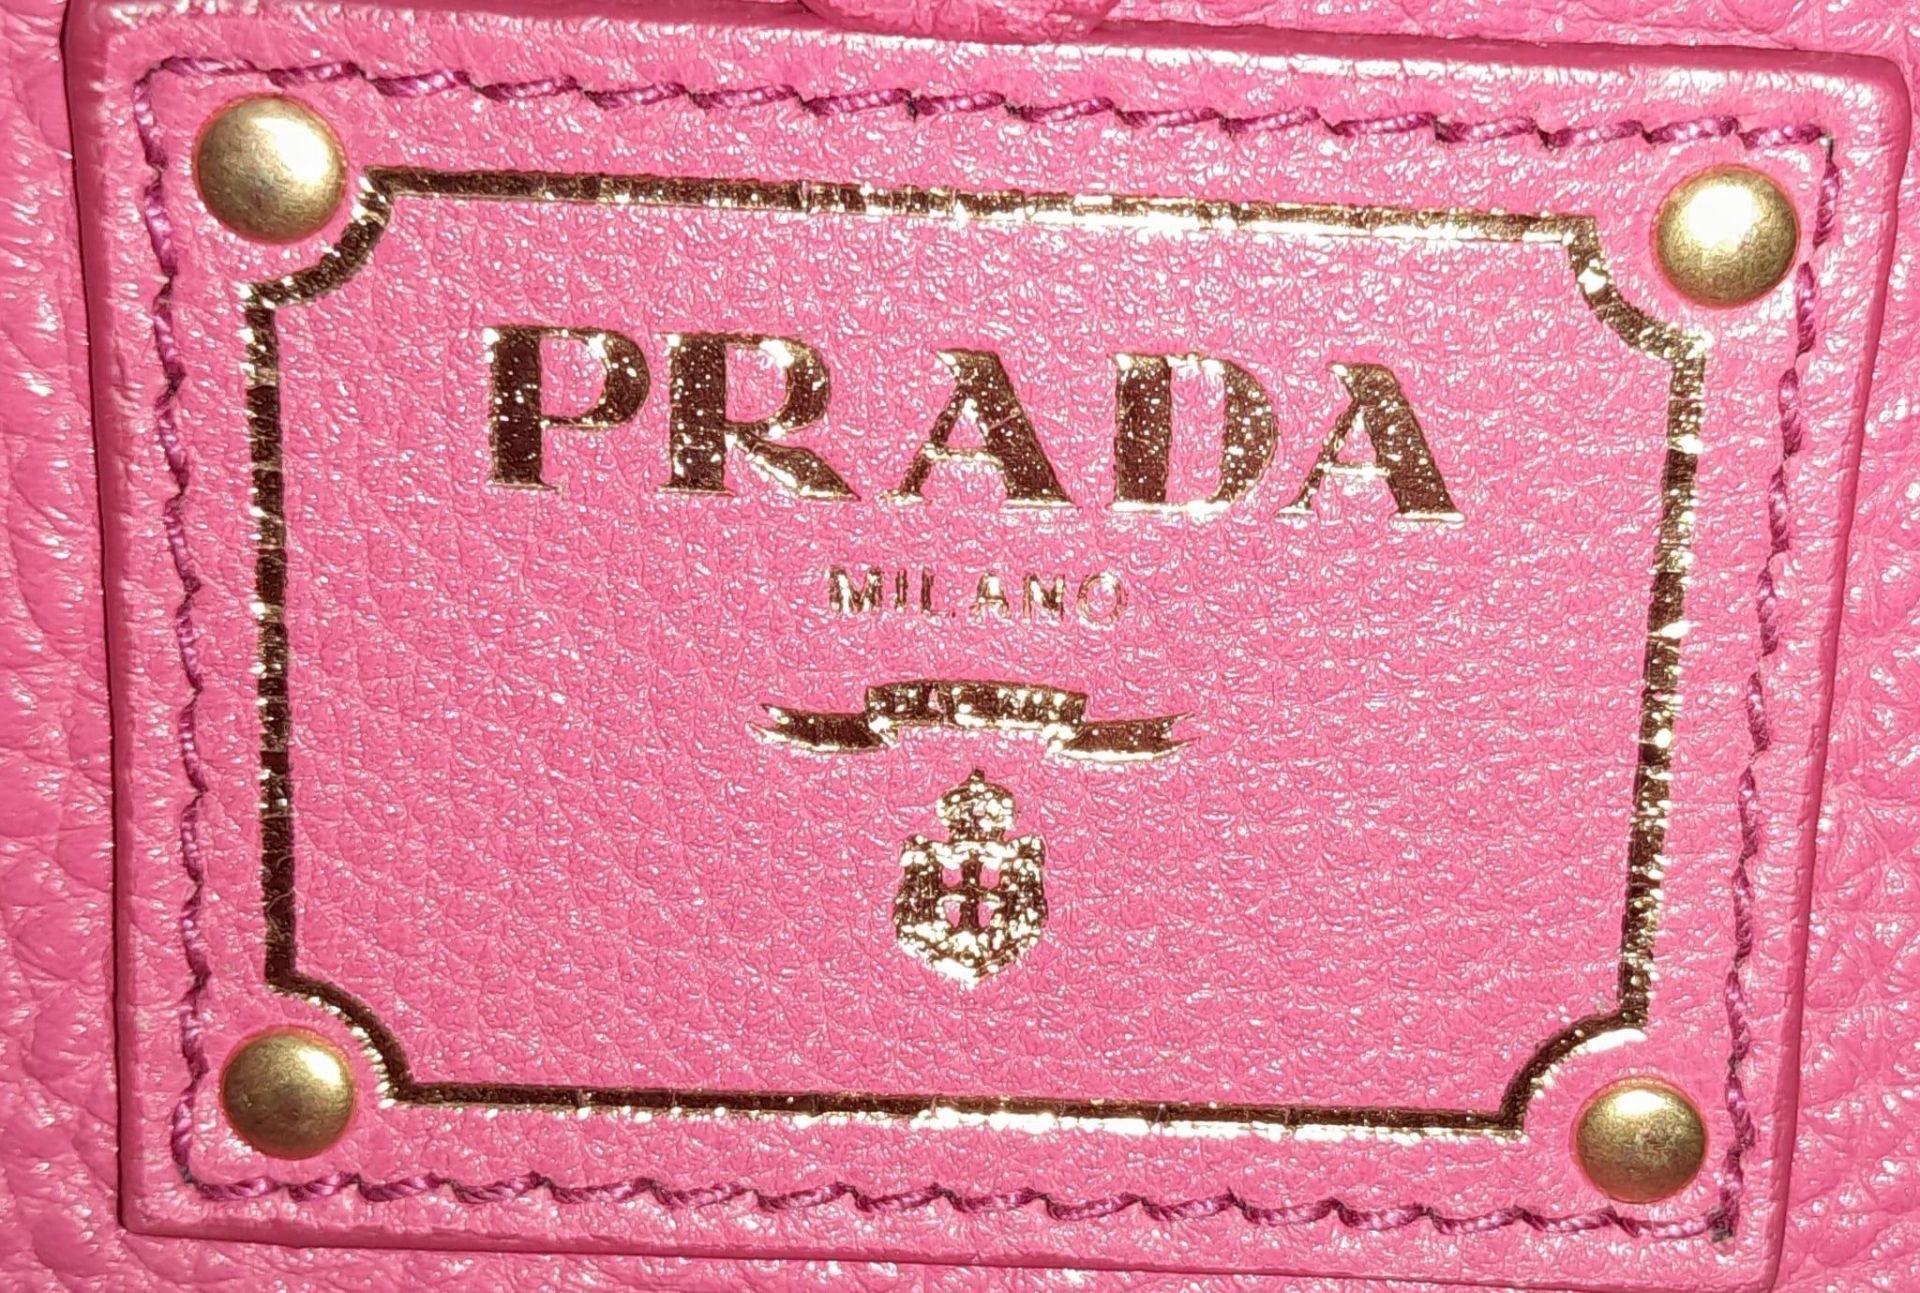 A Prada Vitello Daino satchel bag, soft pink leather, matching leather/fabric interior, gold tone - Image 9 of 11